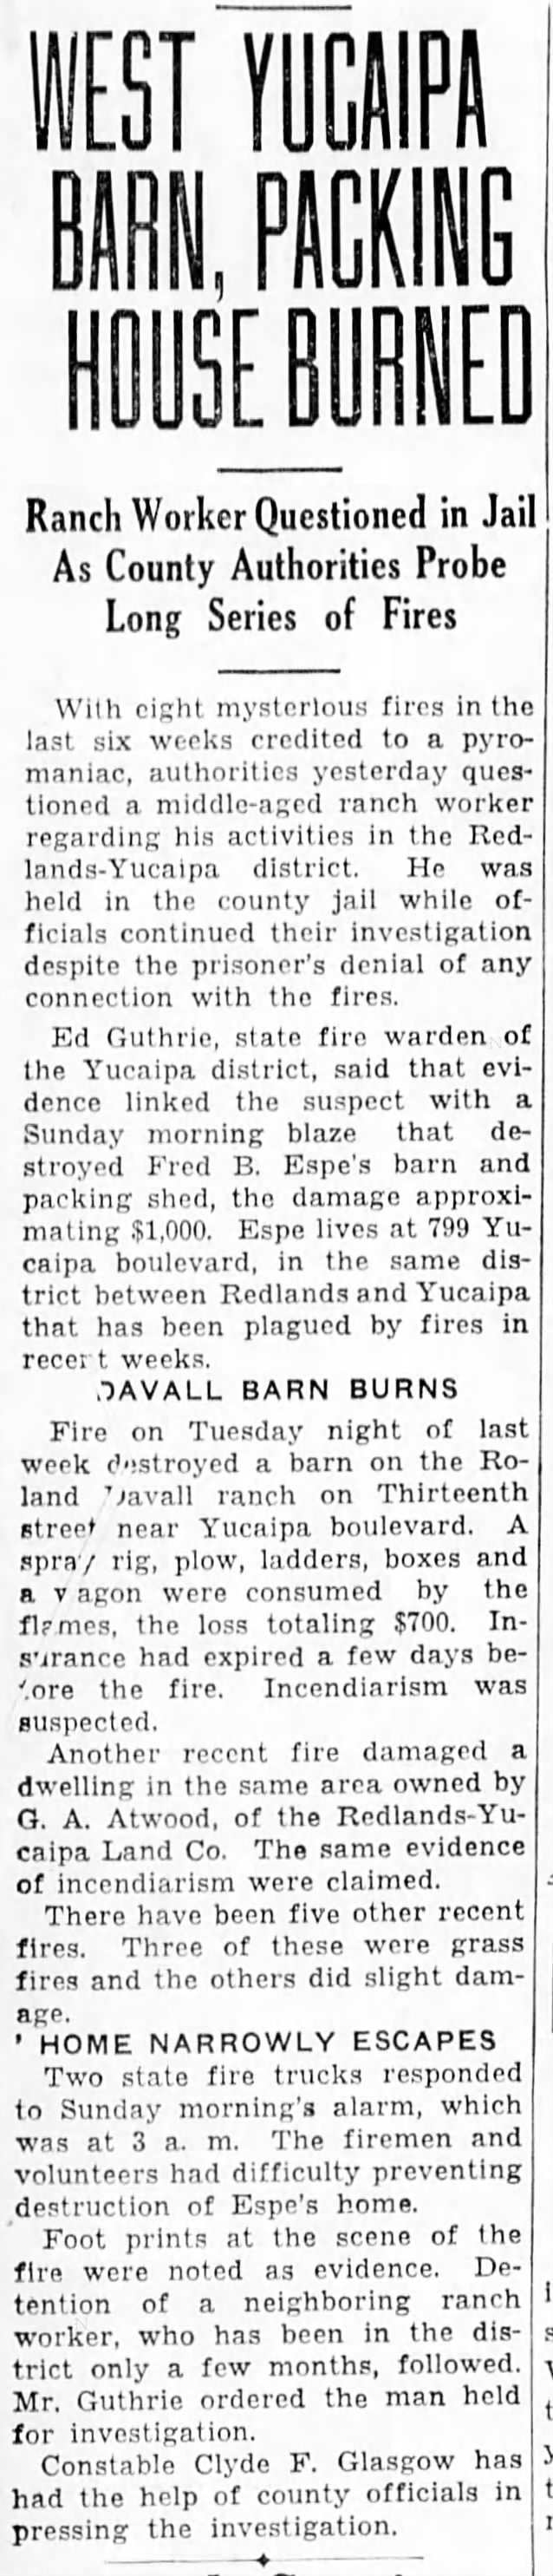 1935-9-4 West Yucaipa Barn Packing House Burned